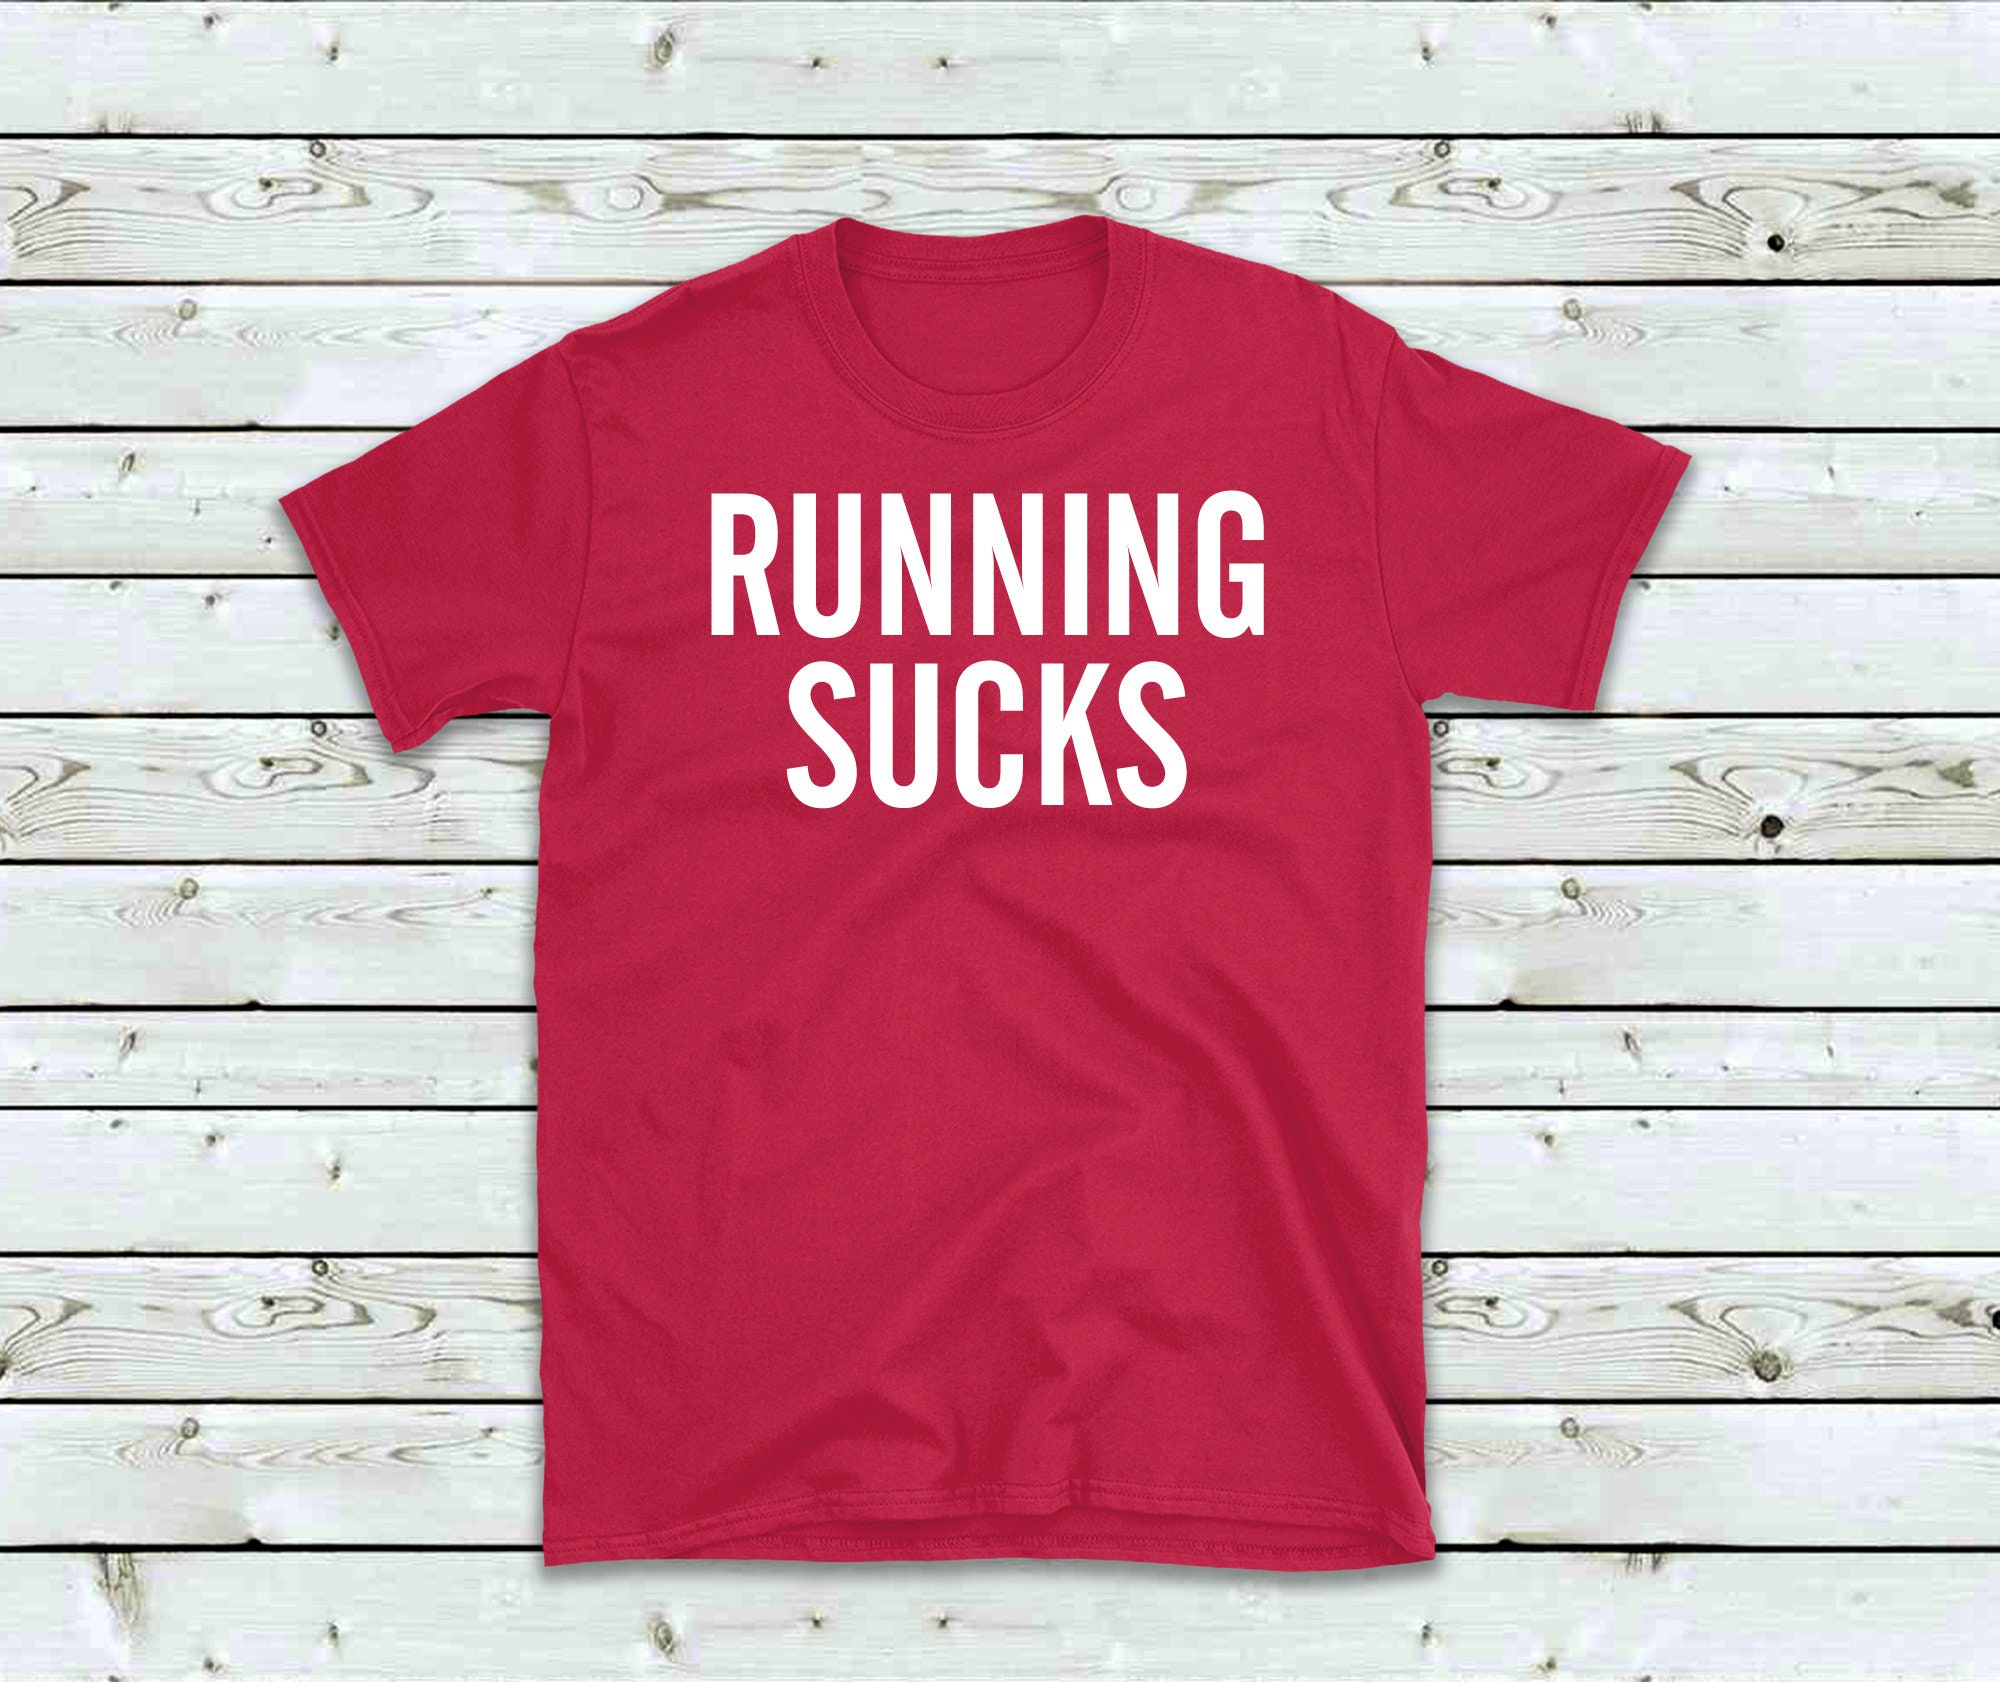 Running Sucks Shirt, Funny Running T-shirt, Run Shirt for Men